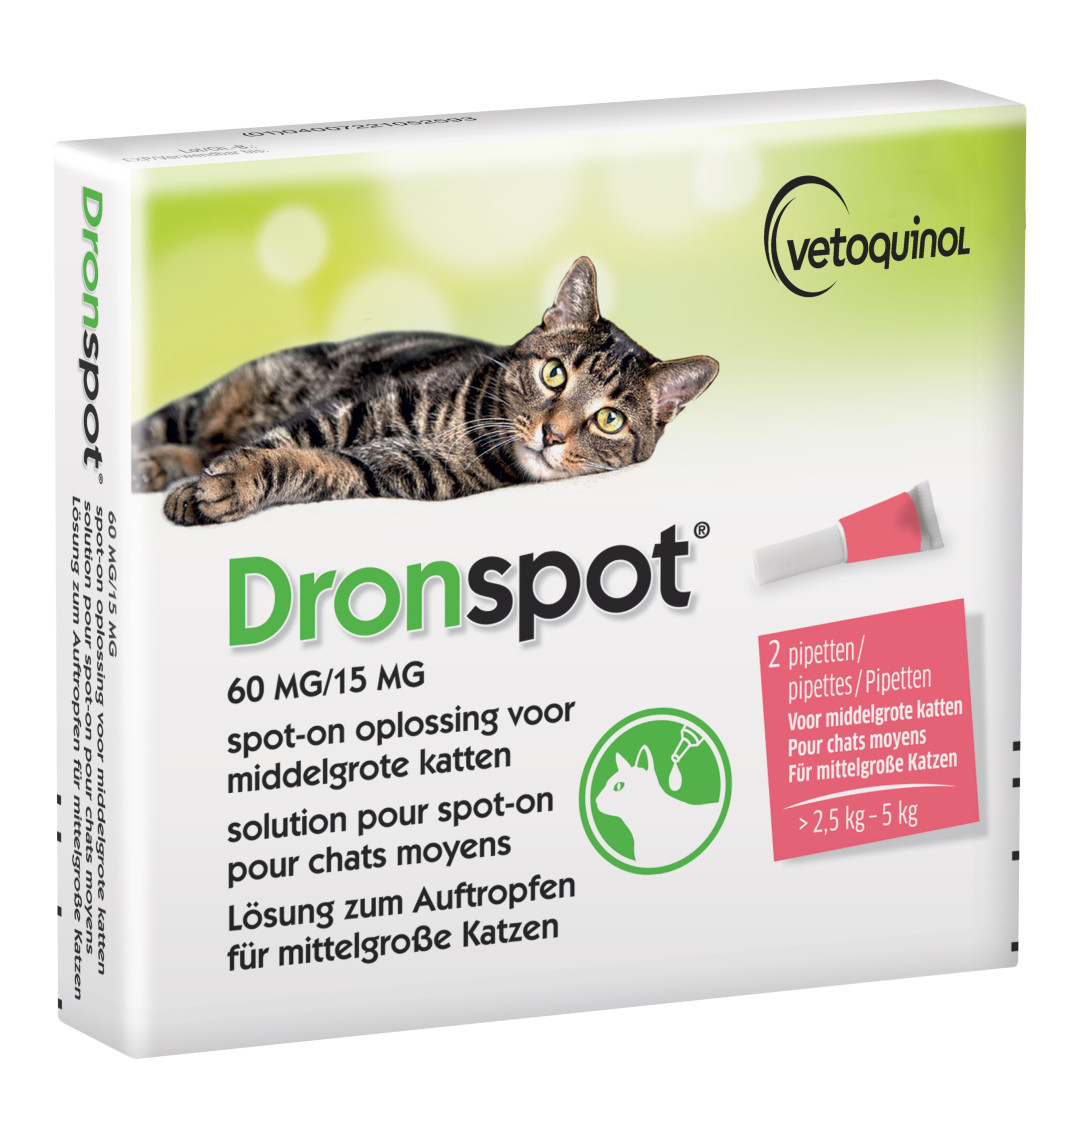 Dronspot spot-on middelgrote kat